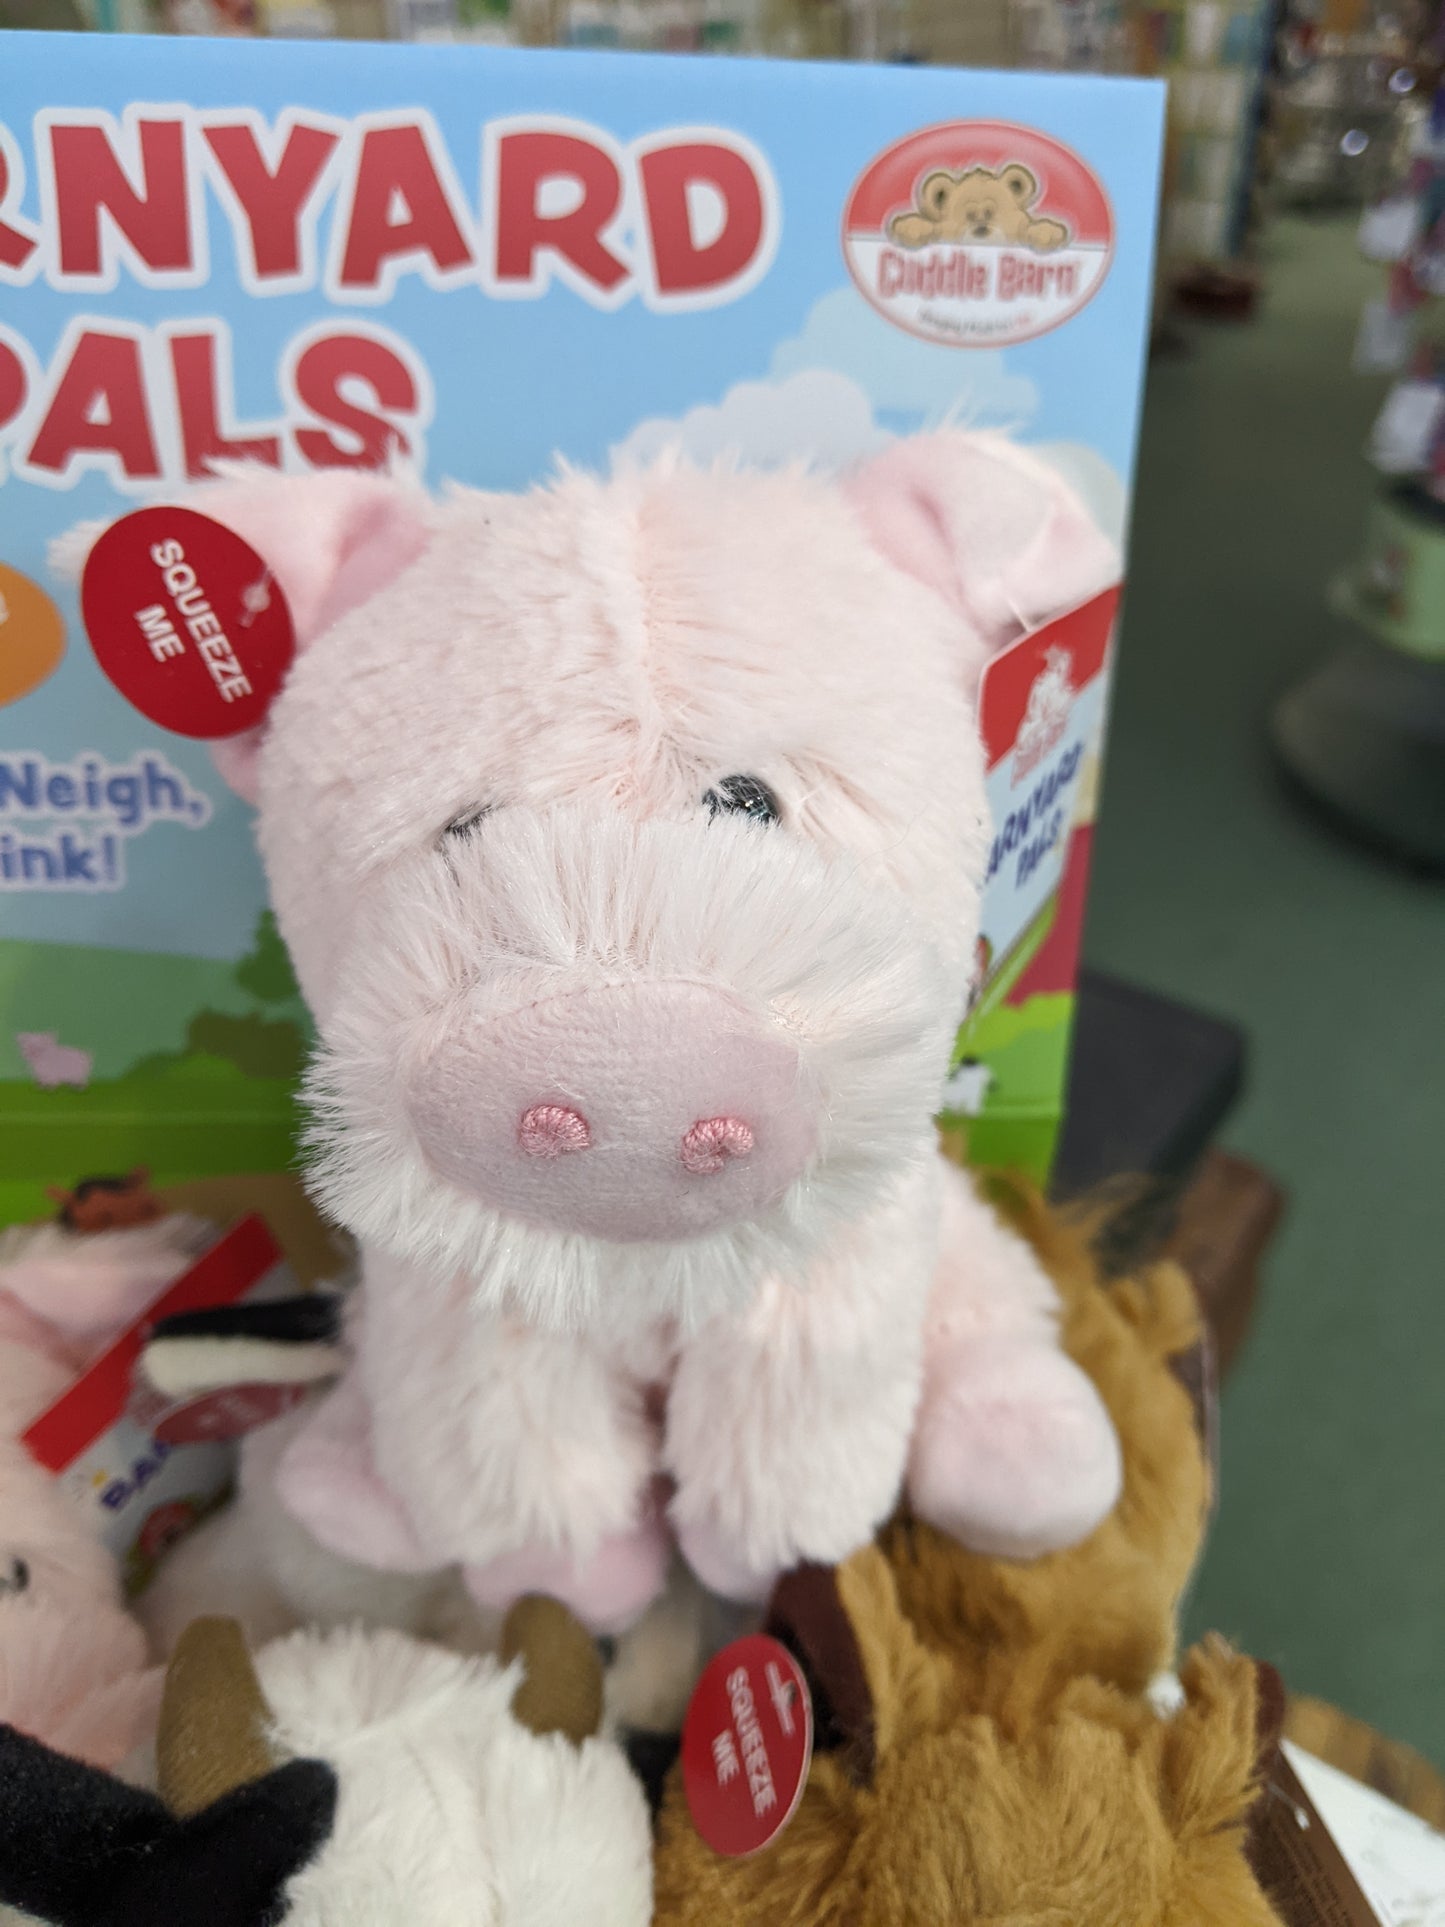 Barnyard Pals (Soft Small Barn Animals Plush Toy)